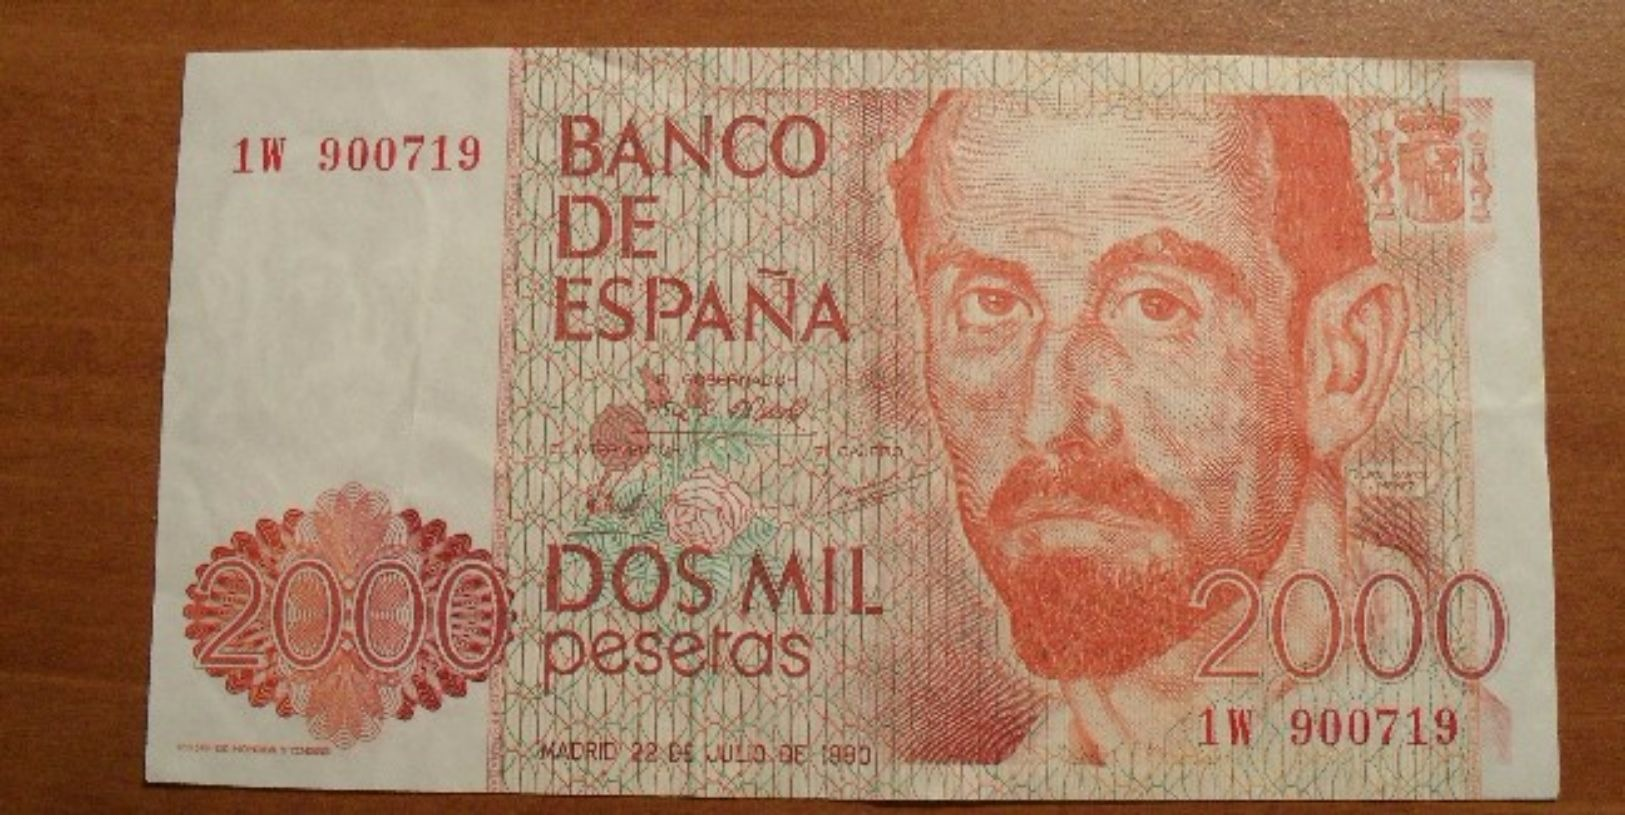 1980 - Espagne - Spain - 2000 PESETAS, 22 De Julio De 1980, 1W 900719 - [ 4] 1975-… : Juan Carlos I